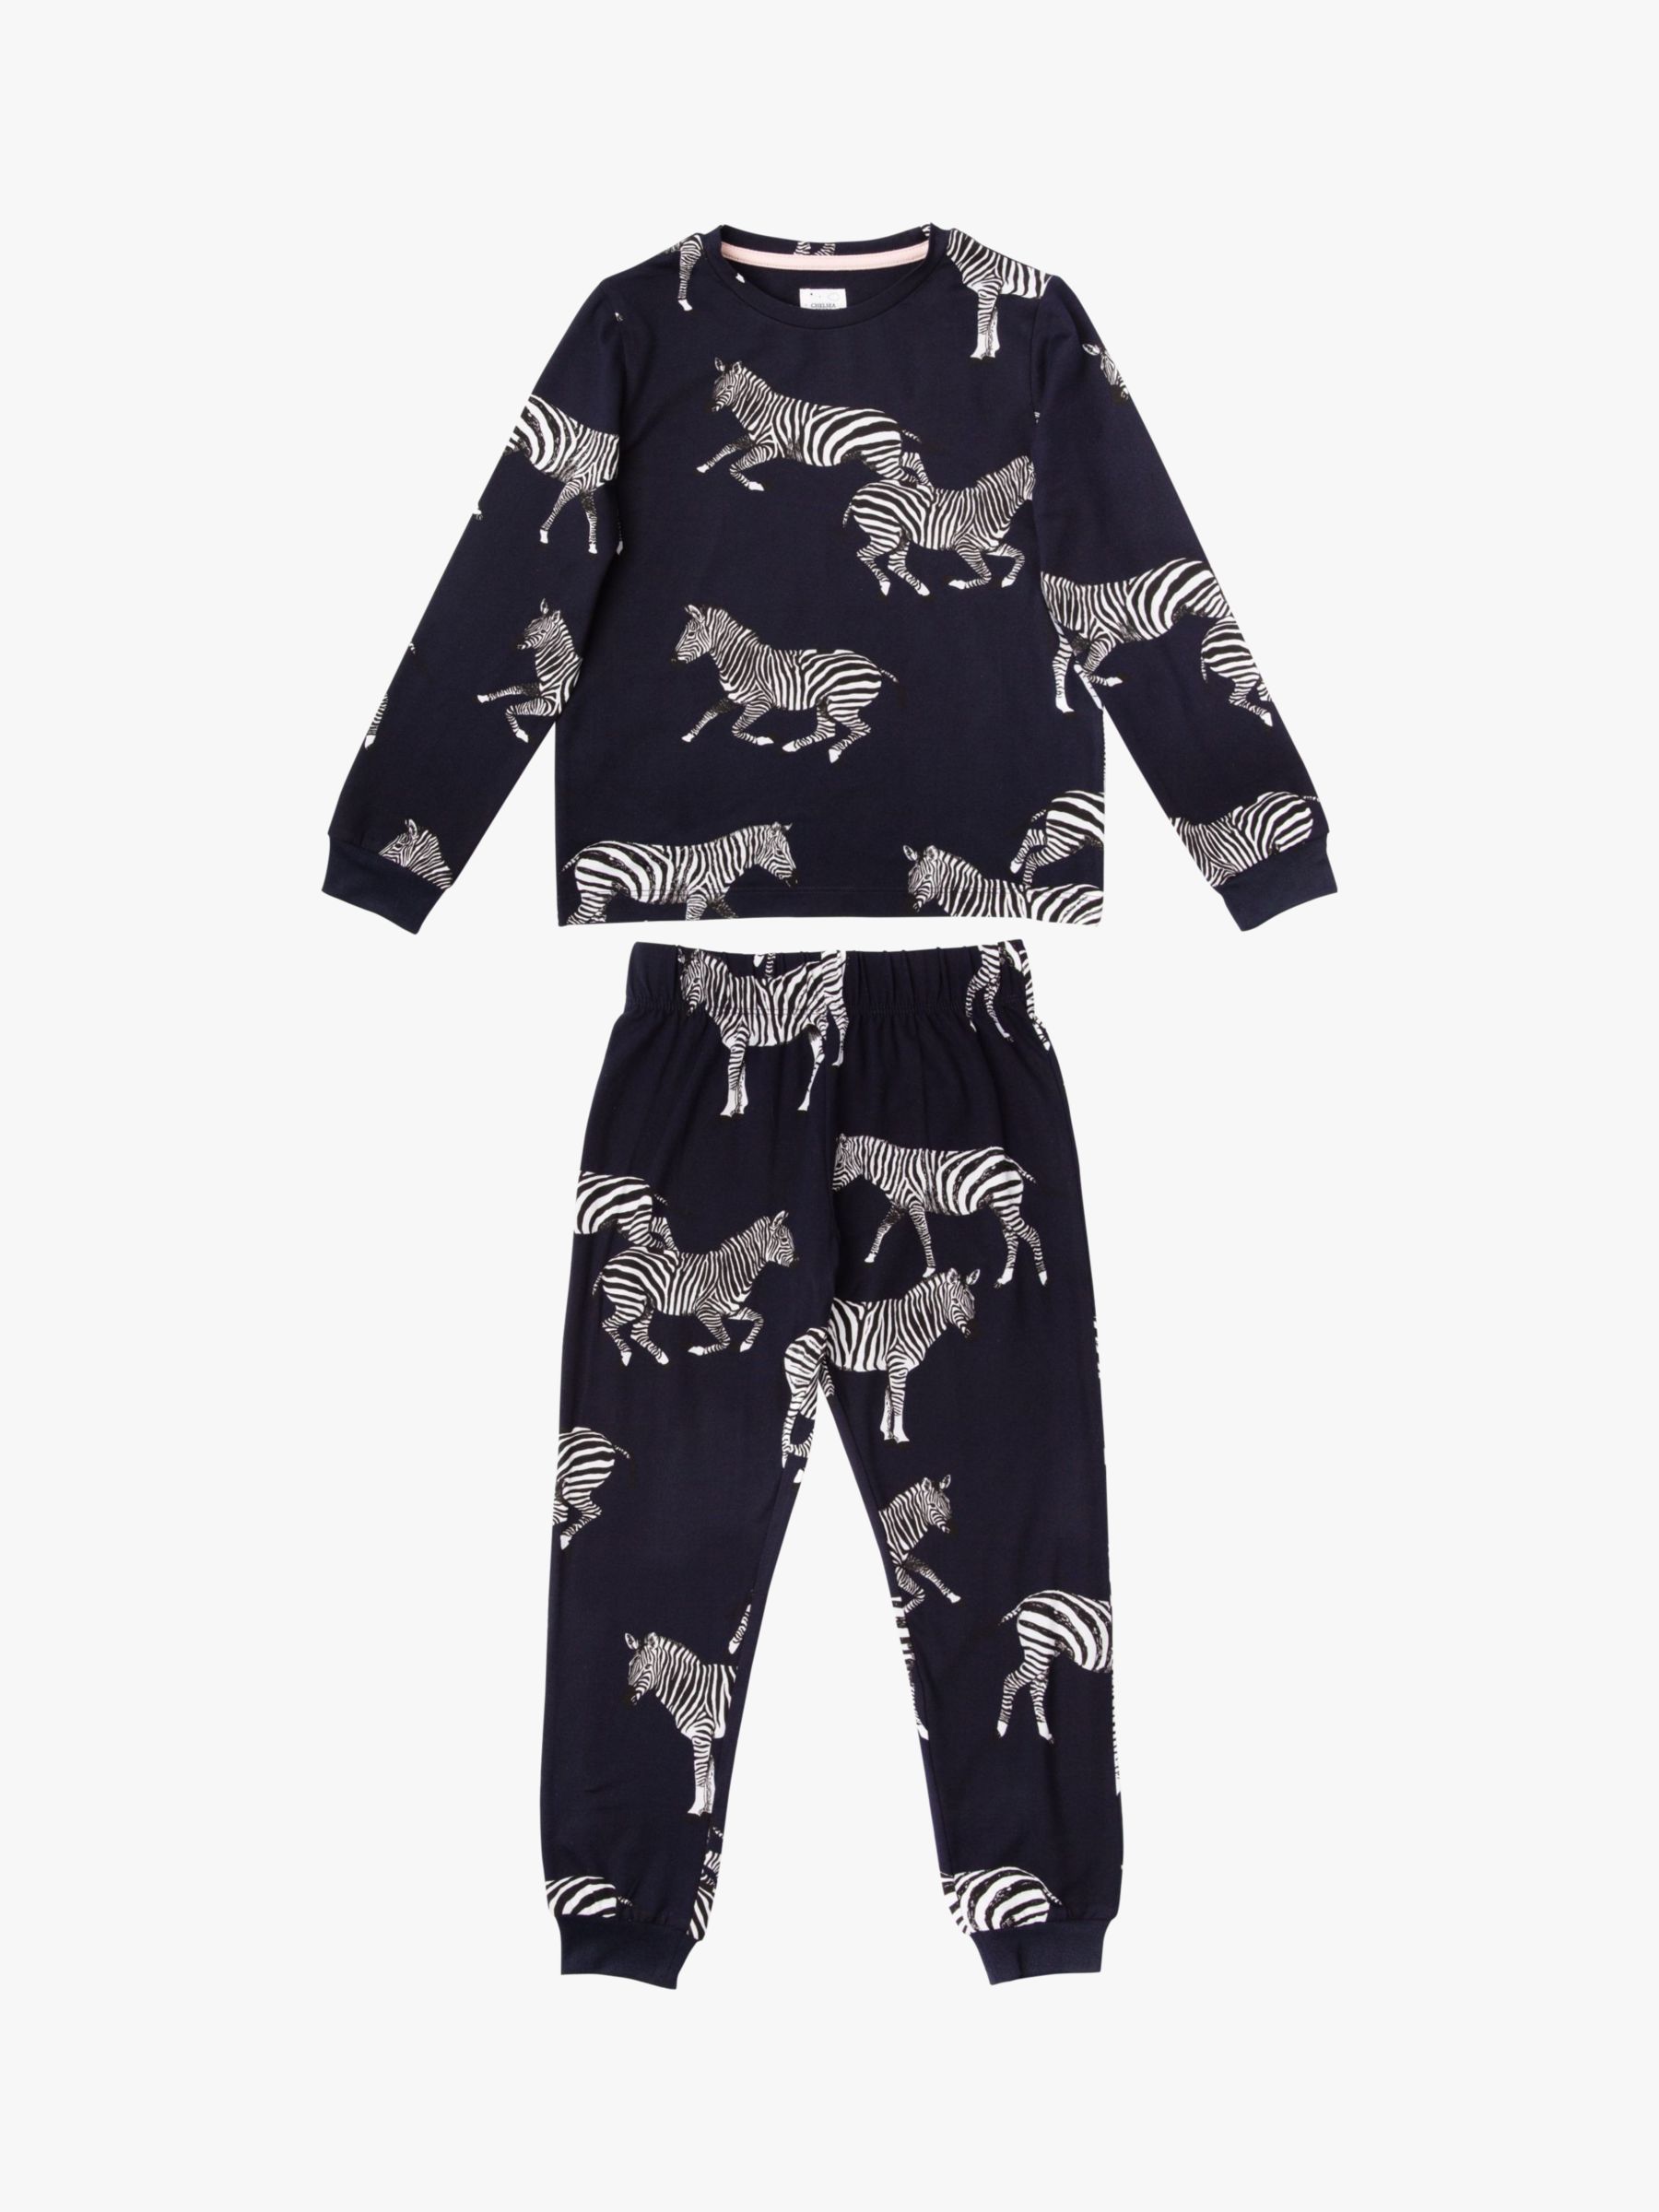 Chelsea Peers Kids' Zebra Classic Pyjama Set, Navy at John Lewis & Partners